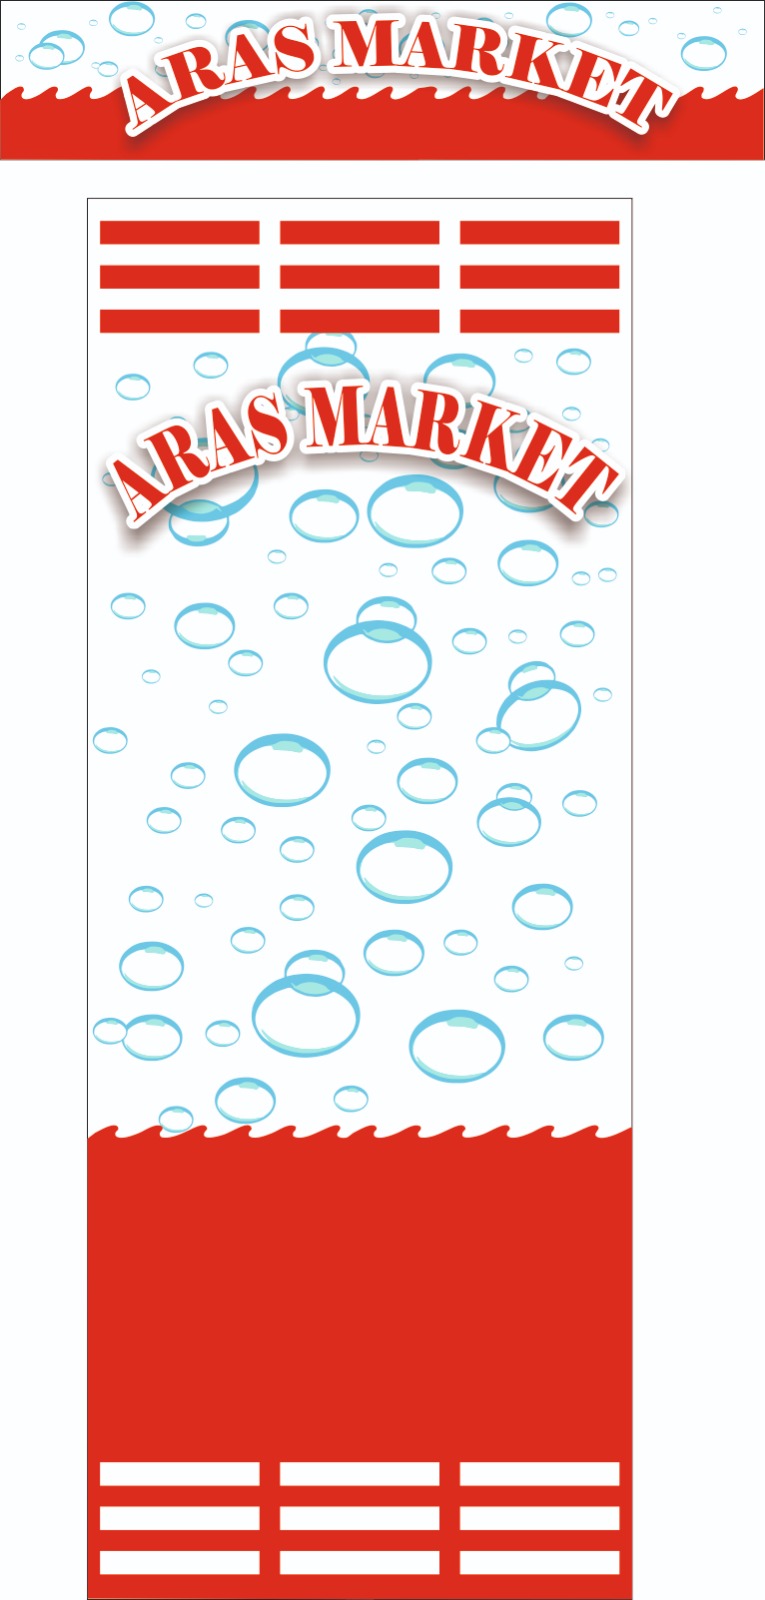 Aras market